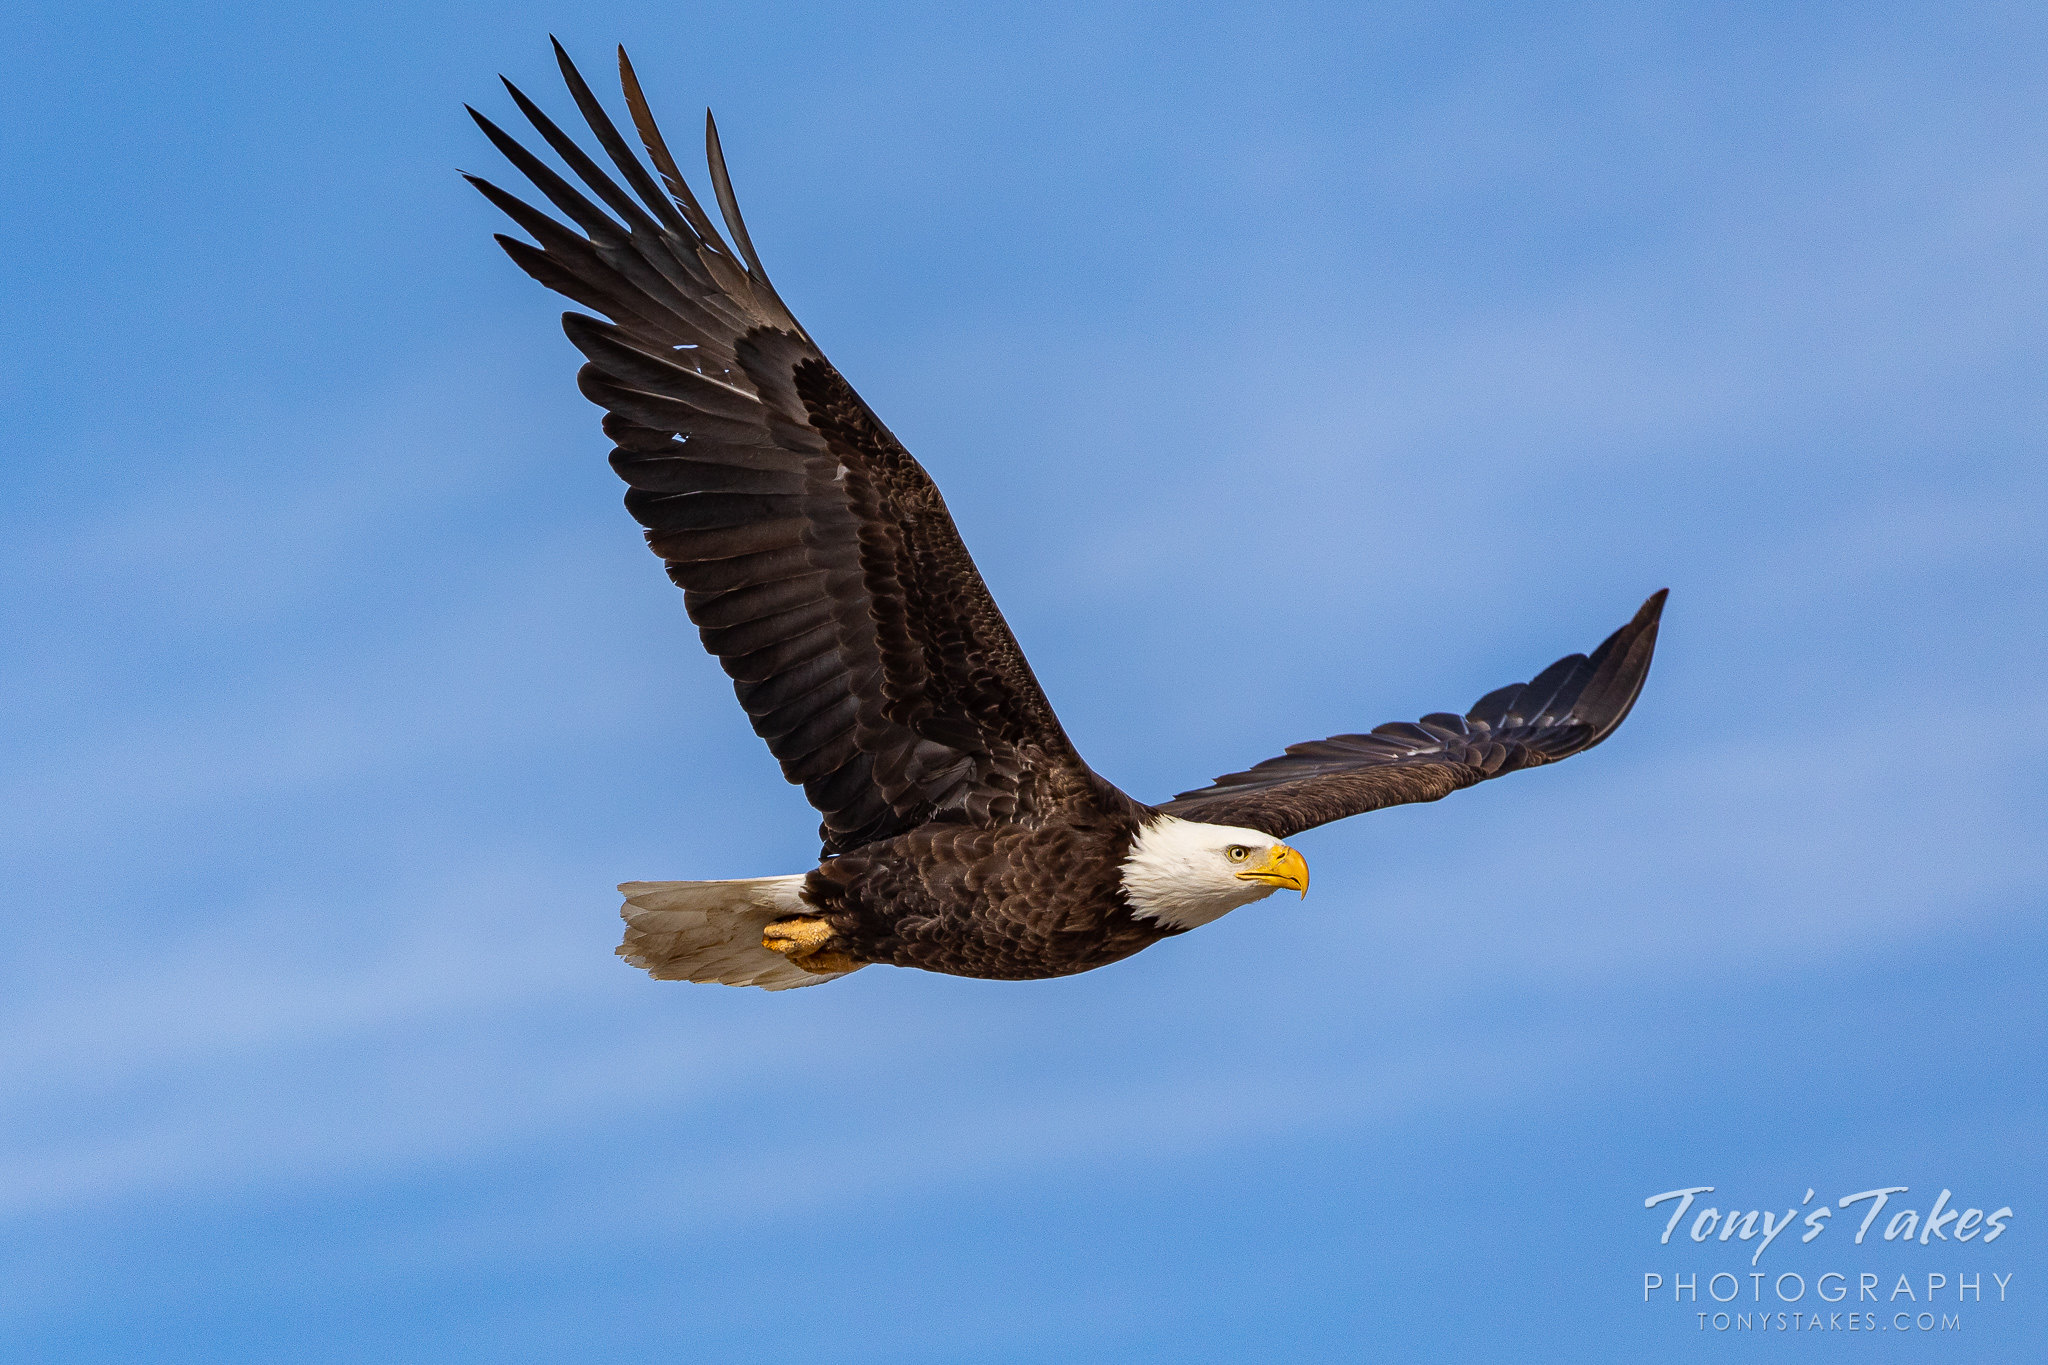 Bald eagle in flight against the big, blue sky